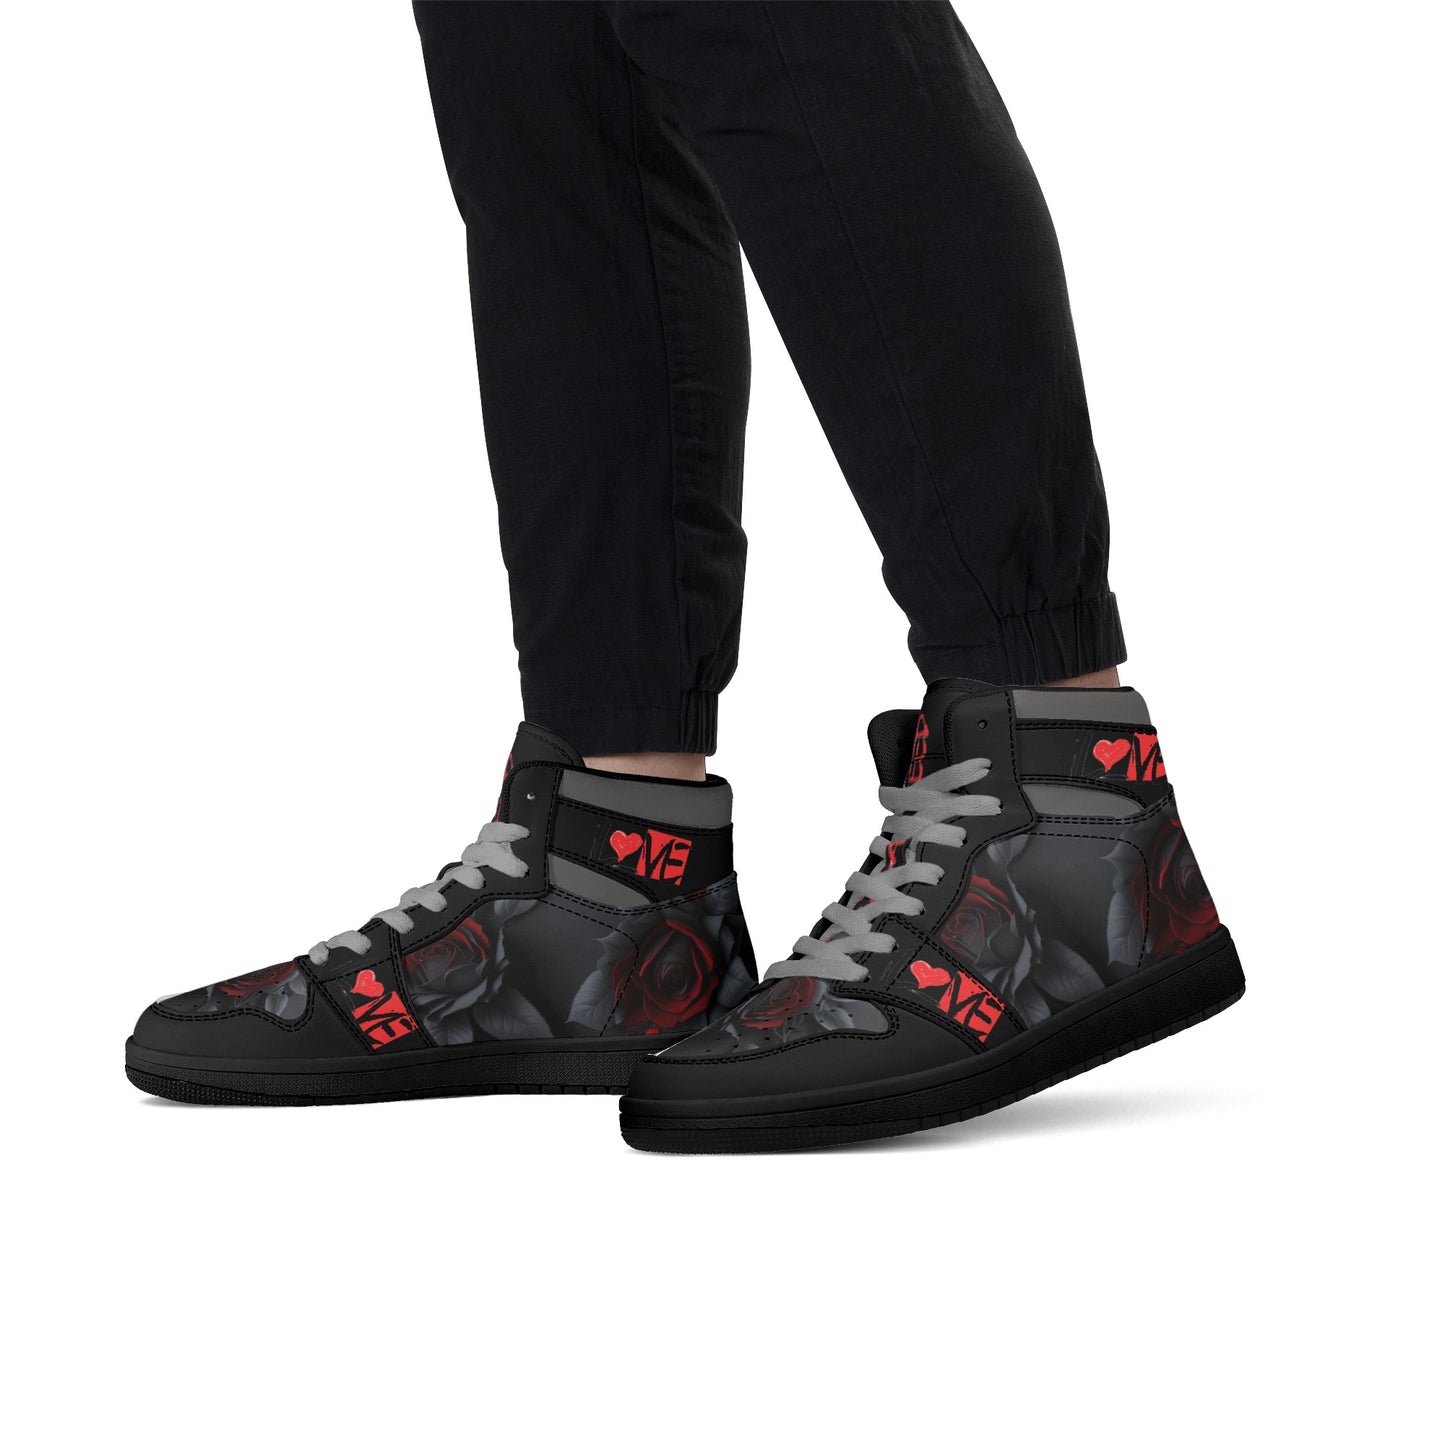 L❤️VE BLACK ROSE Mens Black High Top Leather Sneakers